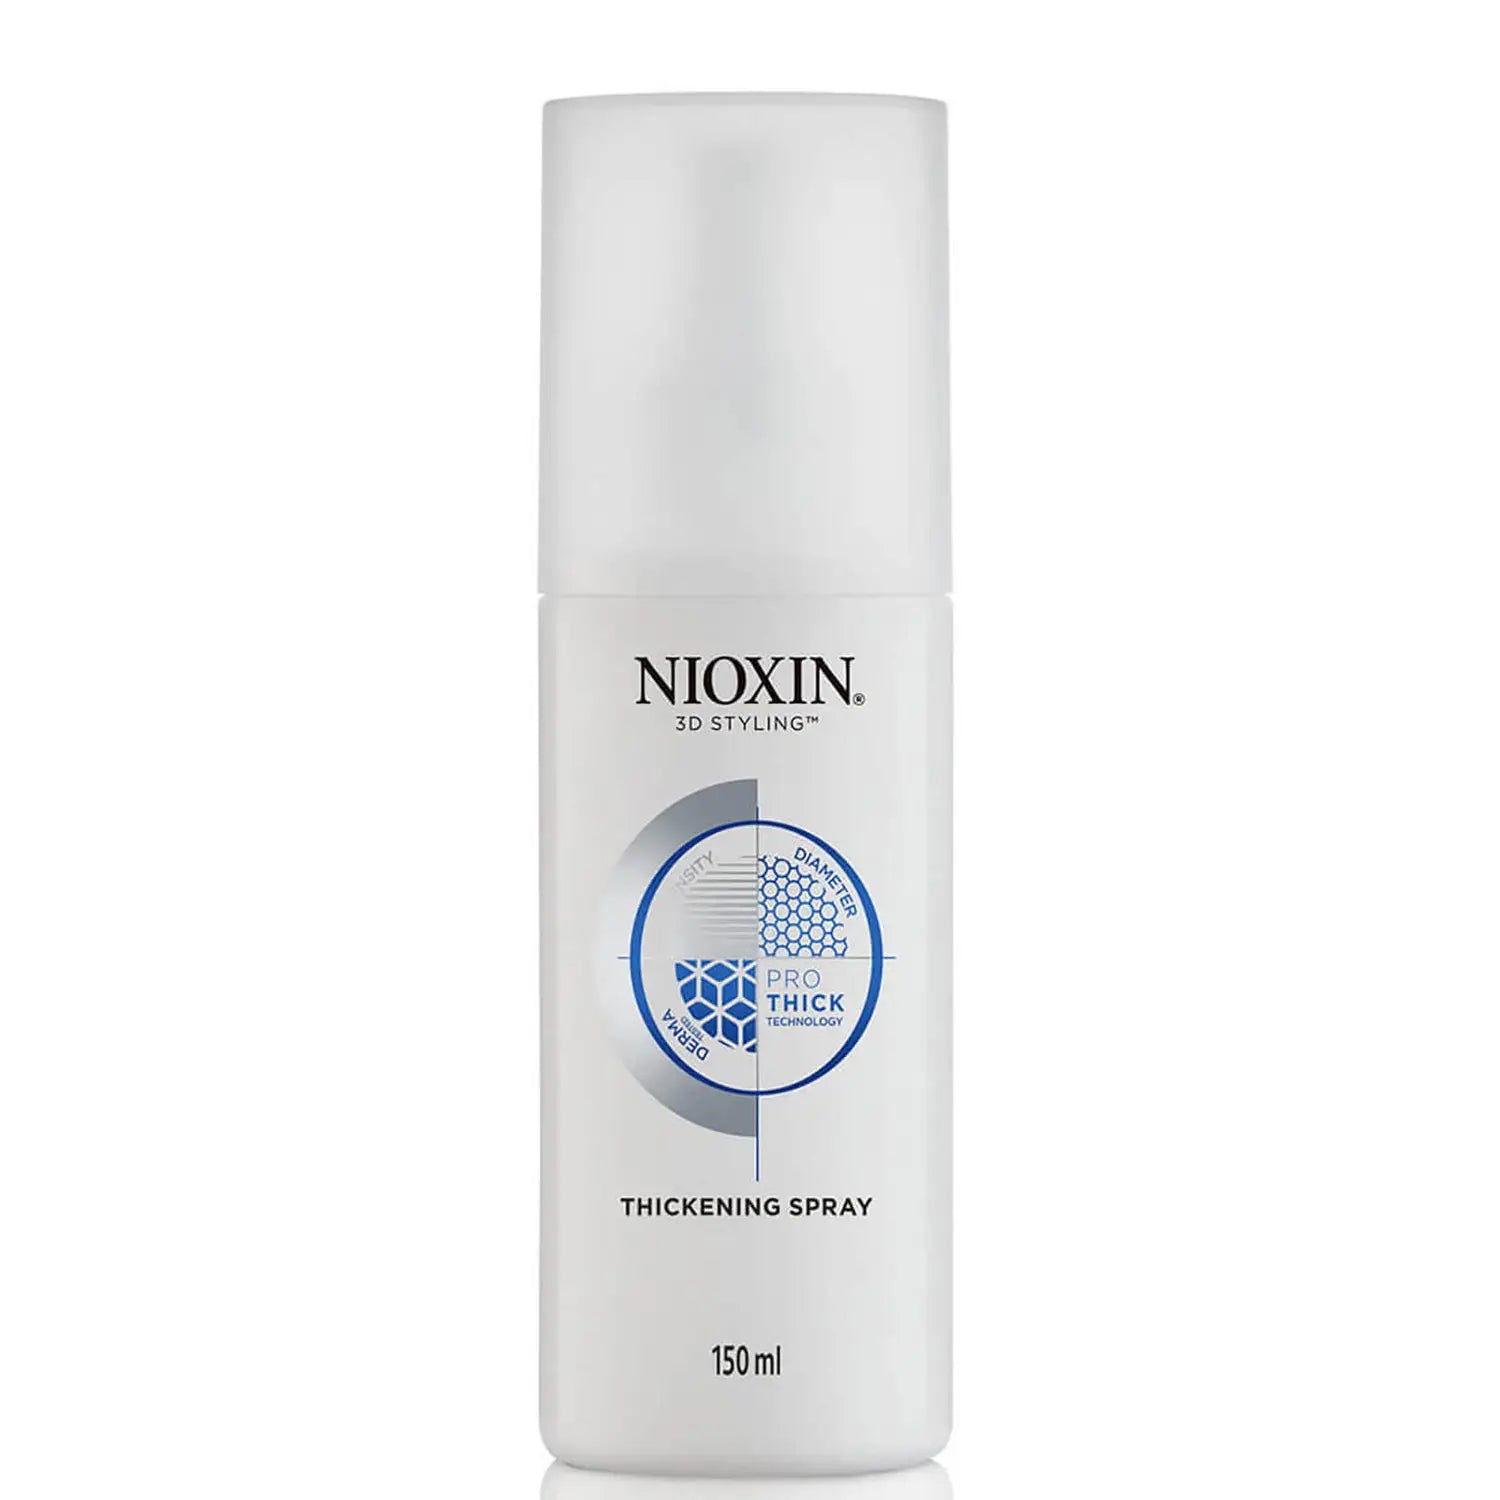 Nioxin 3D Styling Thickening Hair Spray 150ml - Nioxin